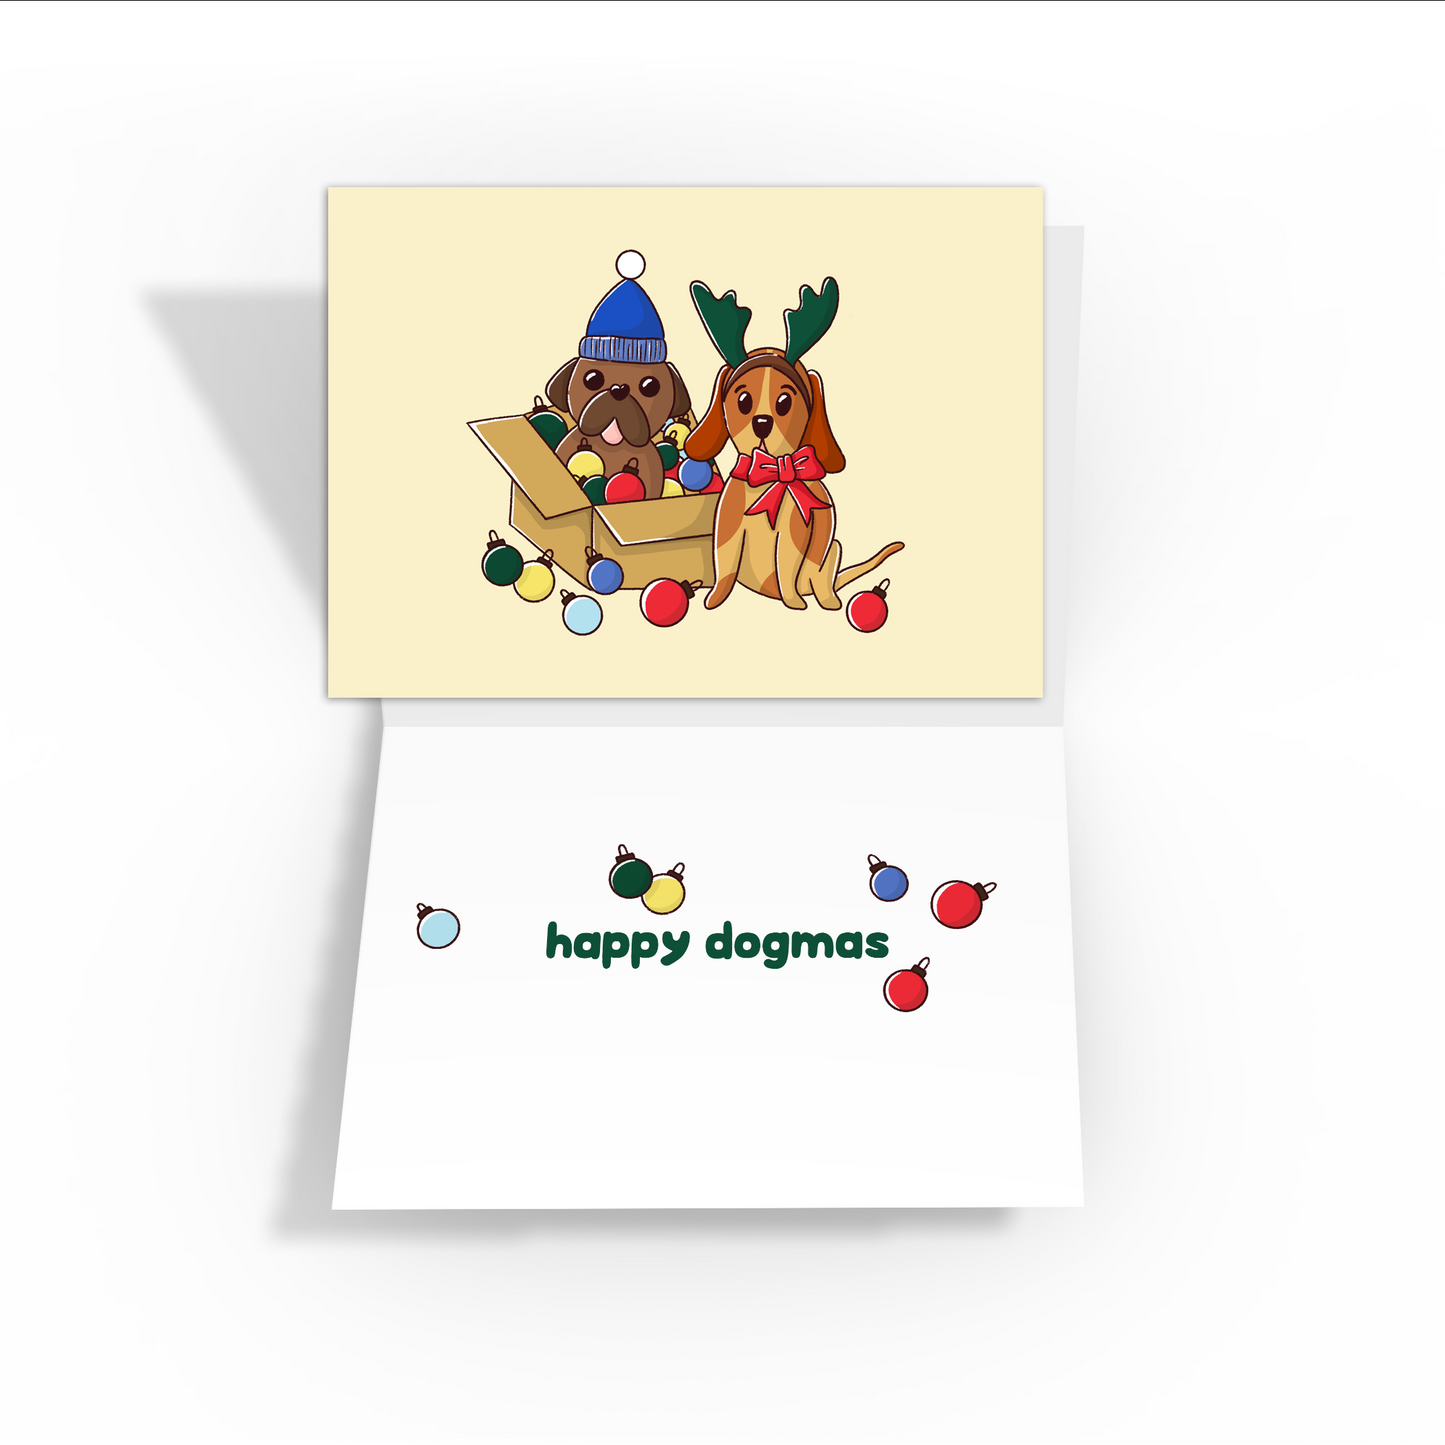 Merry dogmas, dog lover chirstmas card